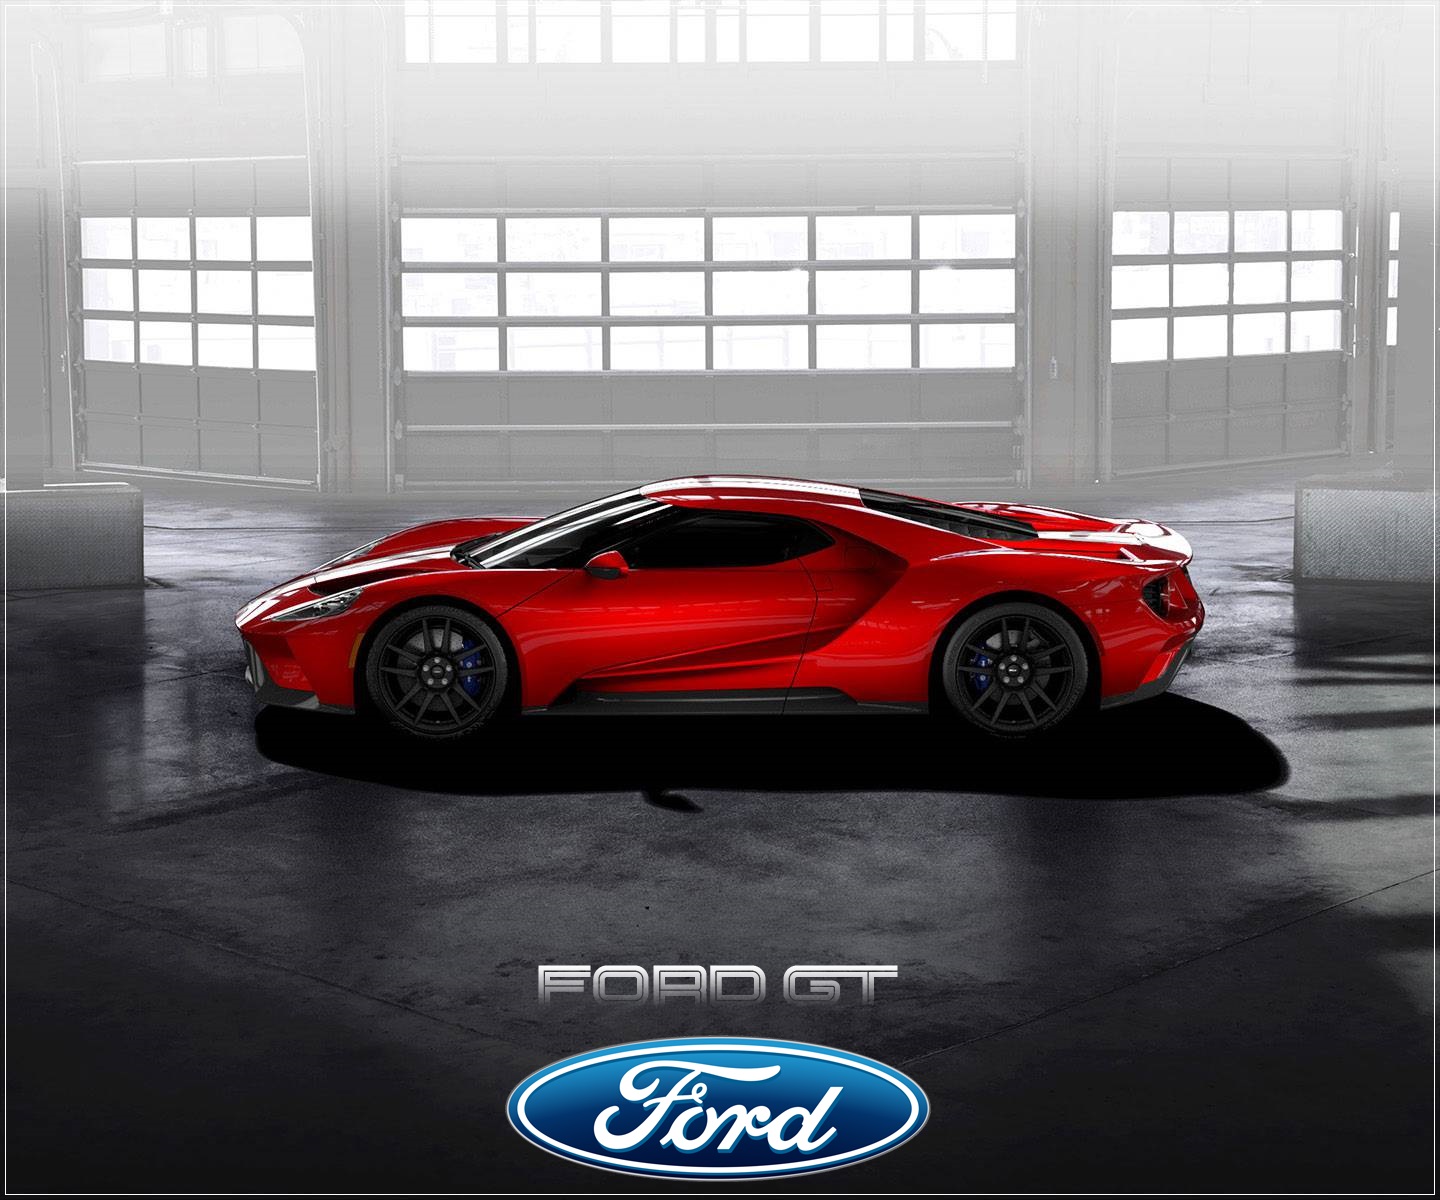  Ford GT 2017 Yılında yollarda olacakmış.